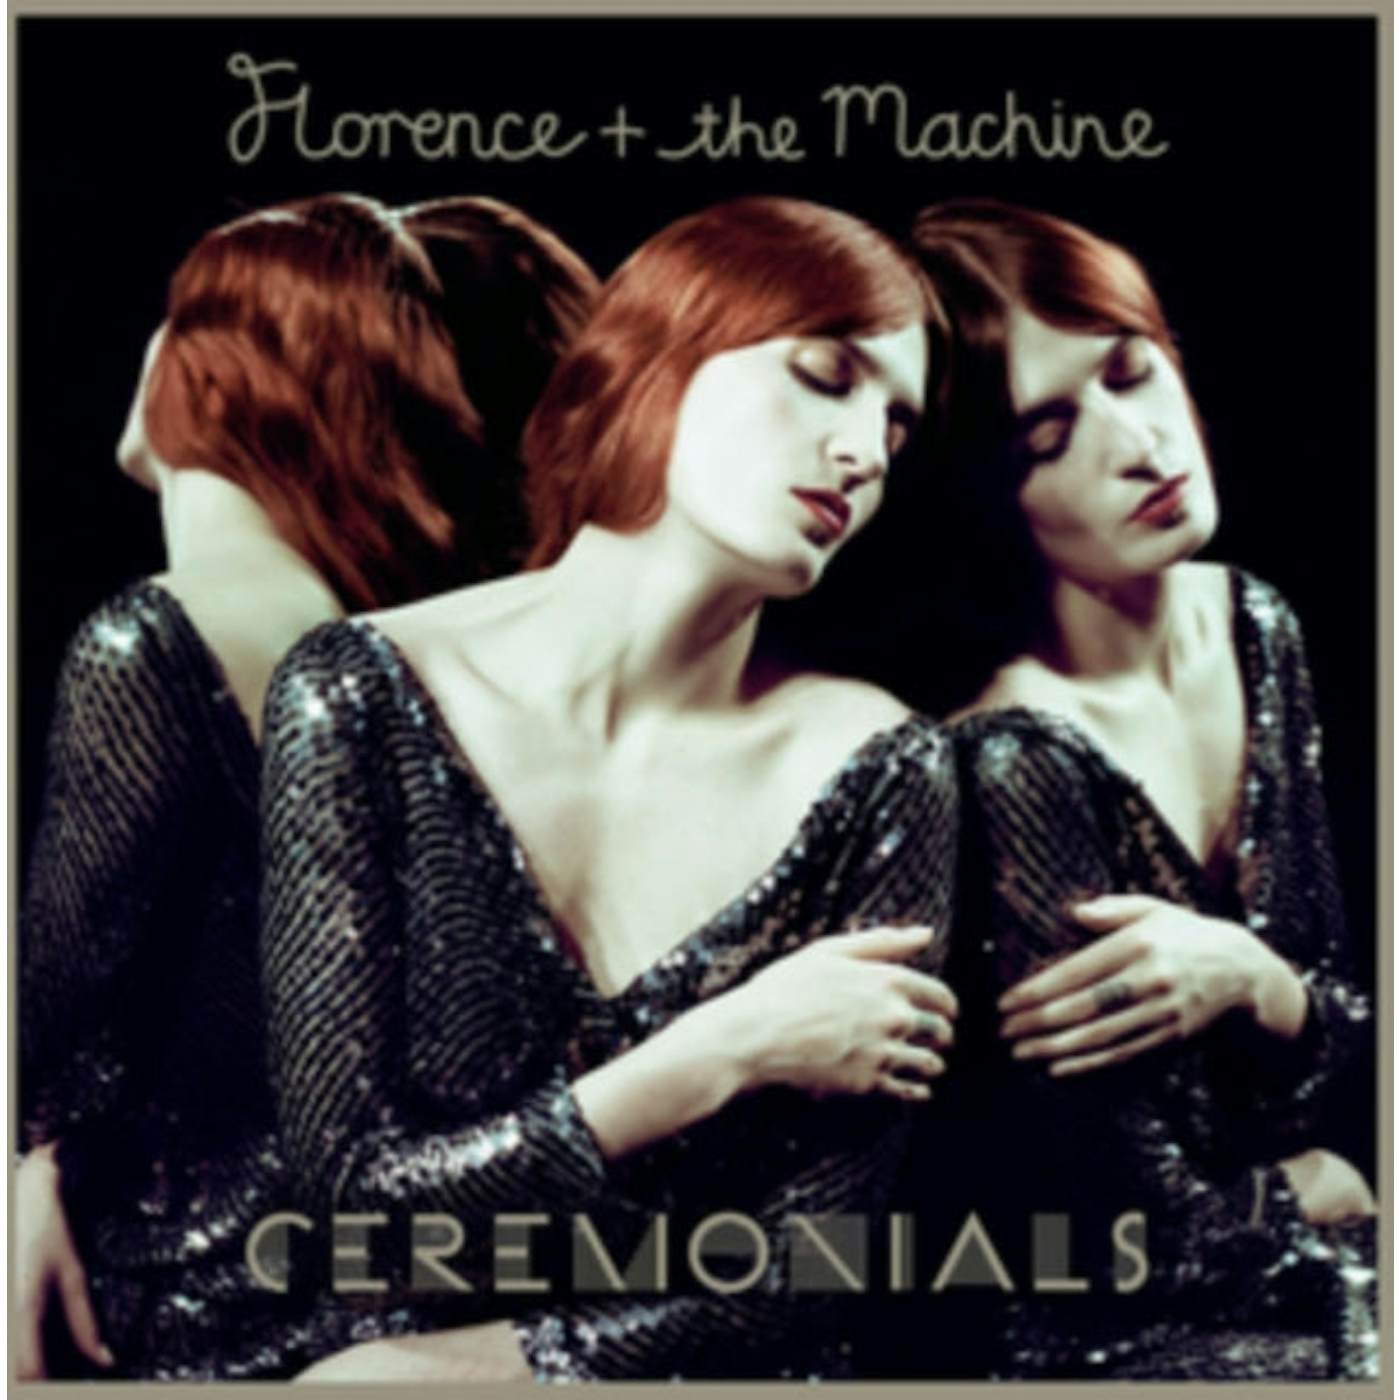 Florence + The Machine LP Vinyl Record - Ceremonials